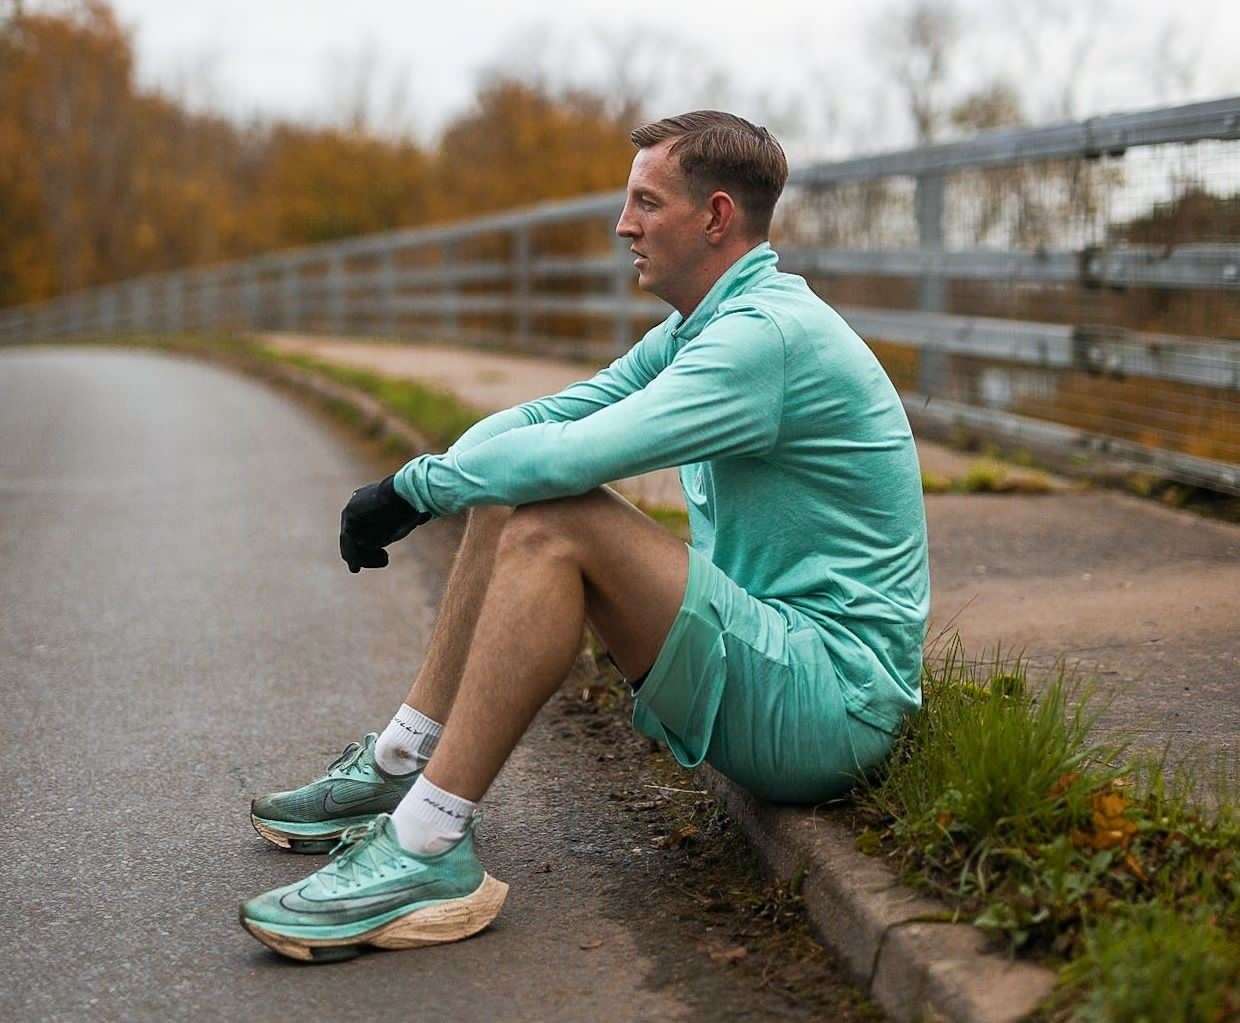 Chris Slater from Platt is running 52 marathons in 52 weeks